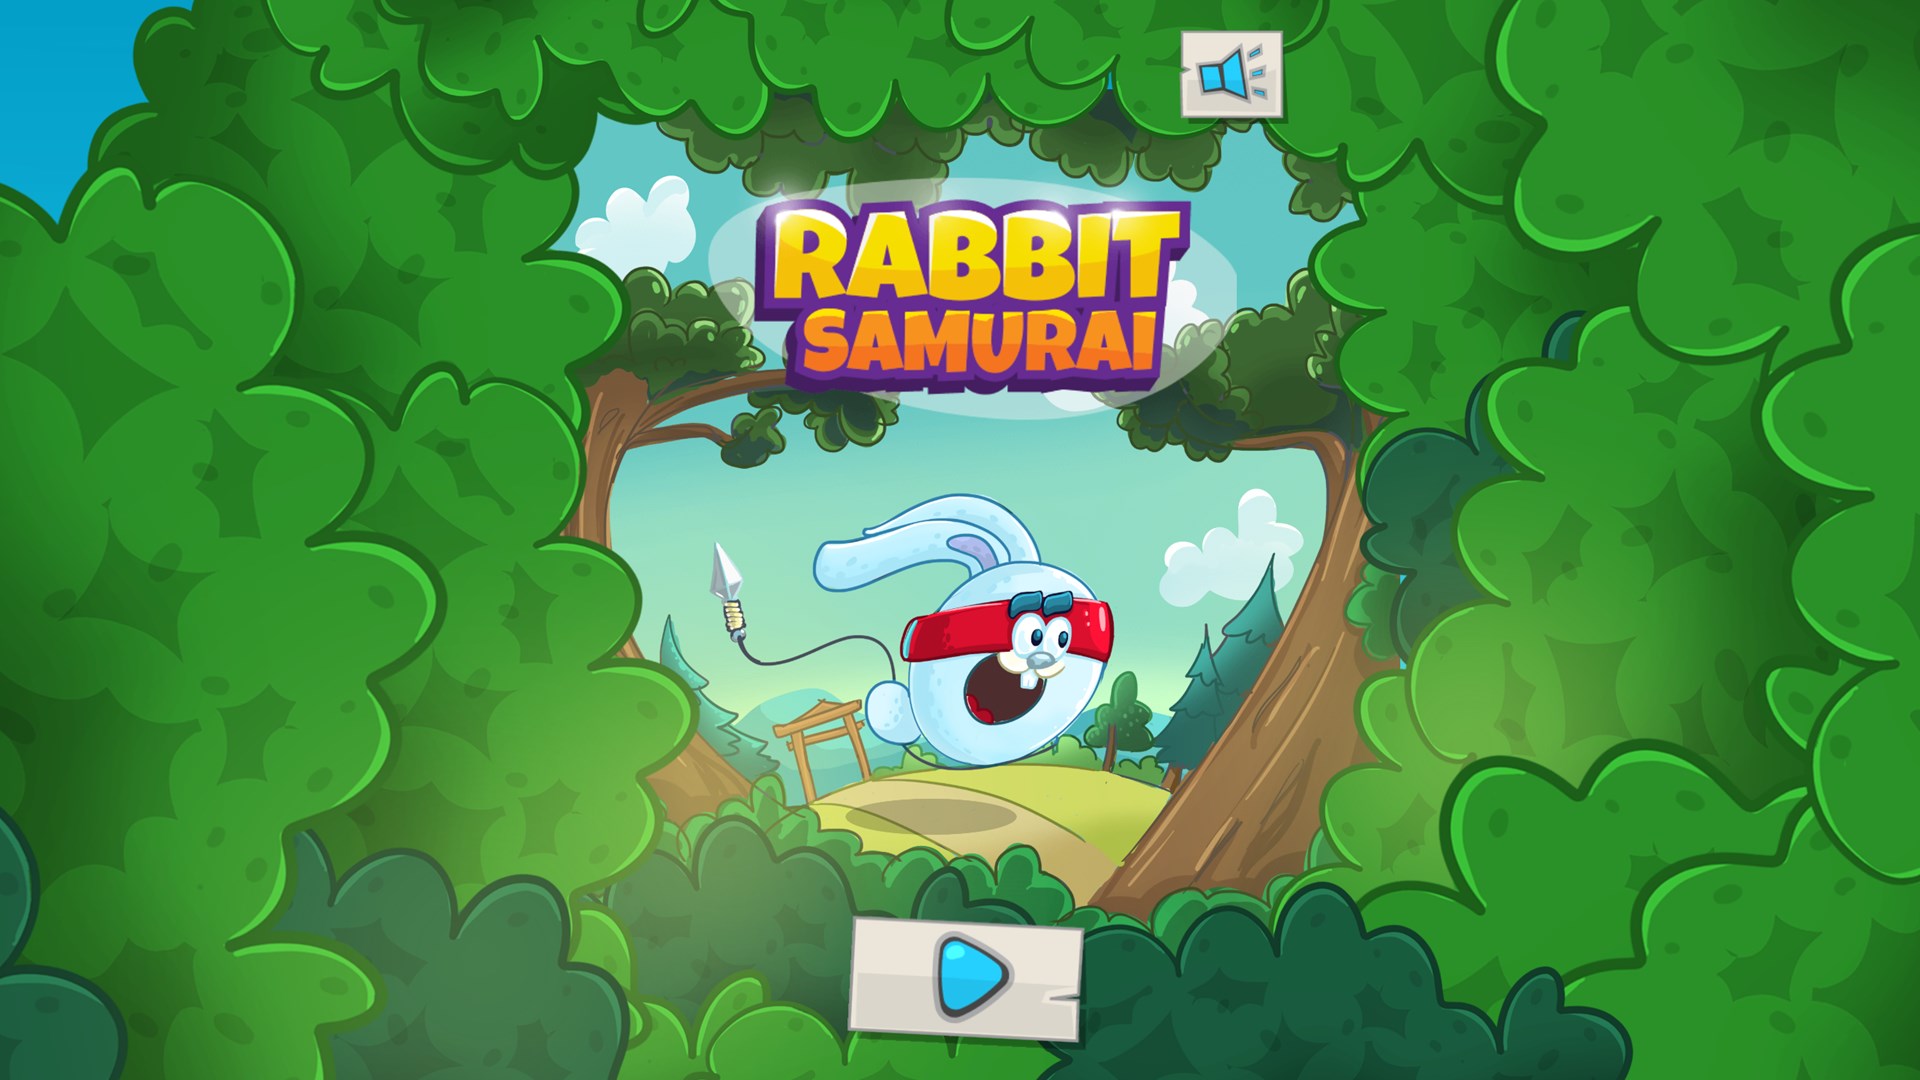 RABBIT SAMURAI 2 - Play Online for Free!